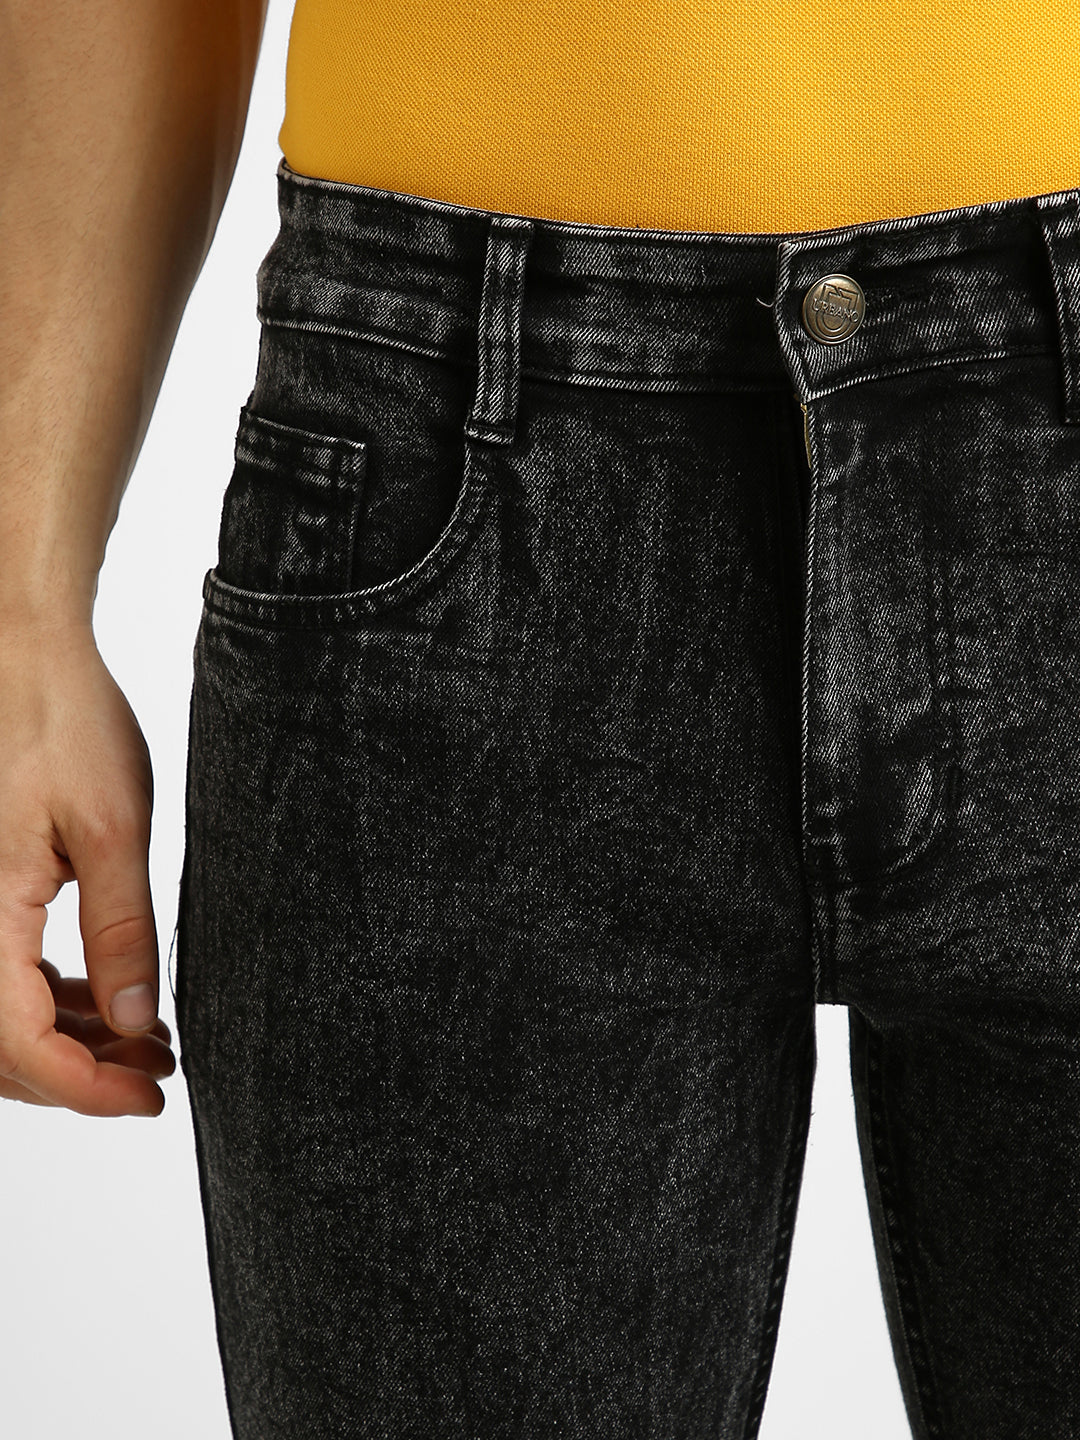 Urbano Fashion Men's Black Regular Fit Washed Jeans Stretchable